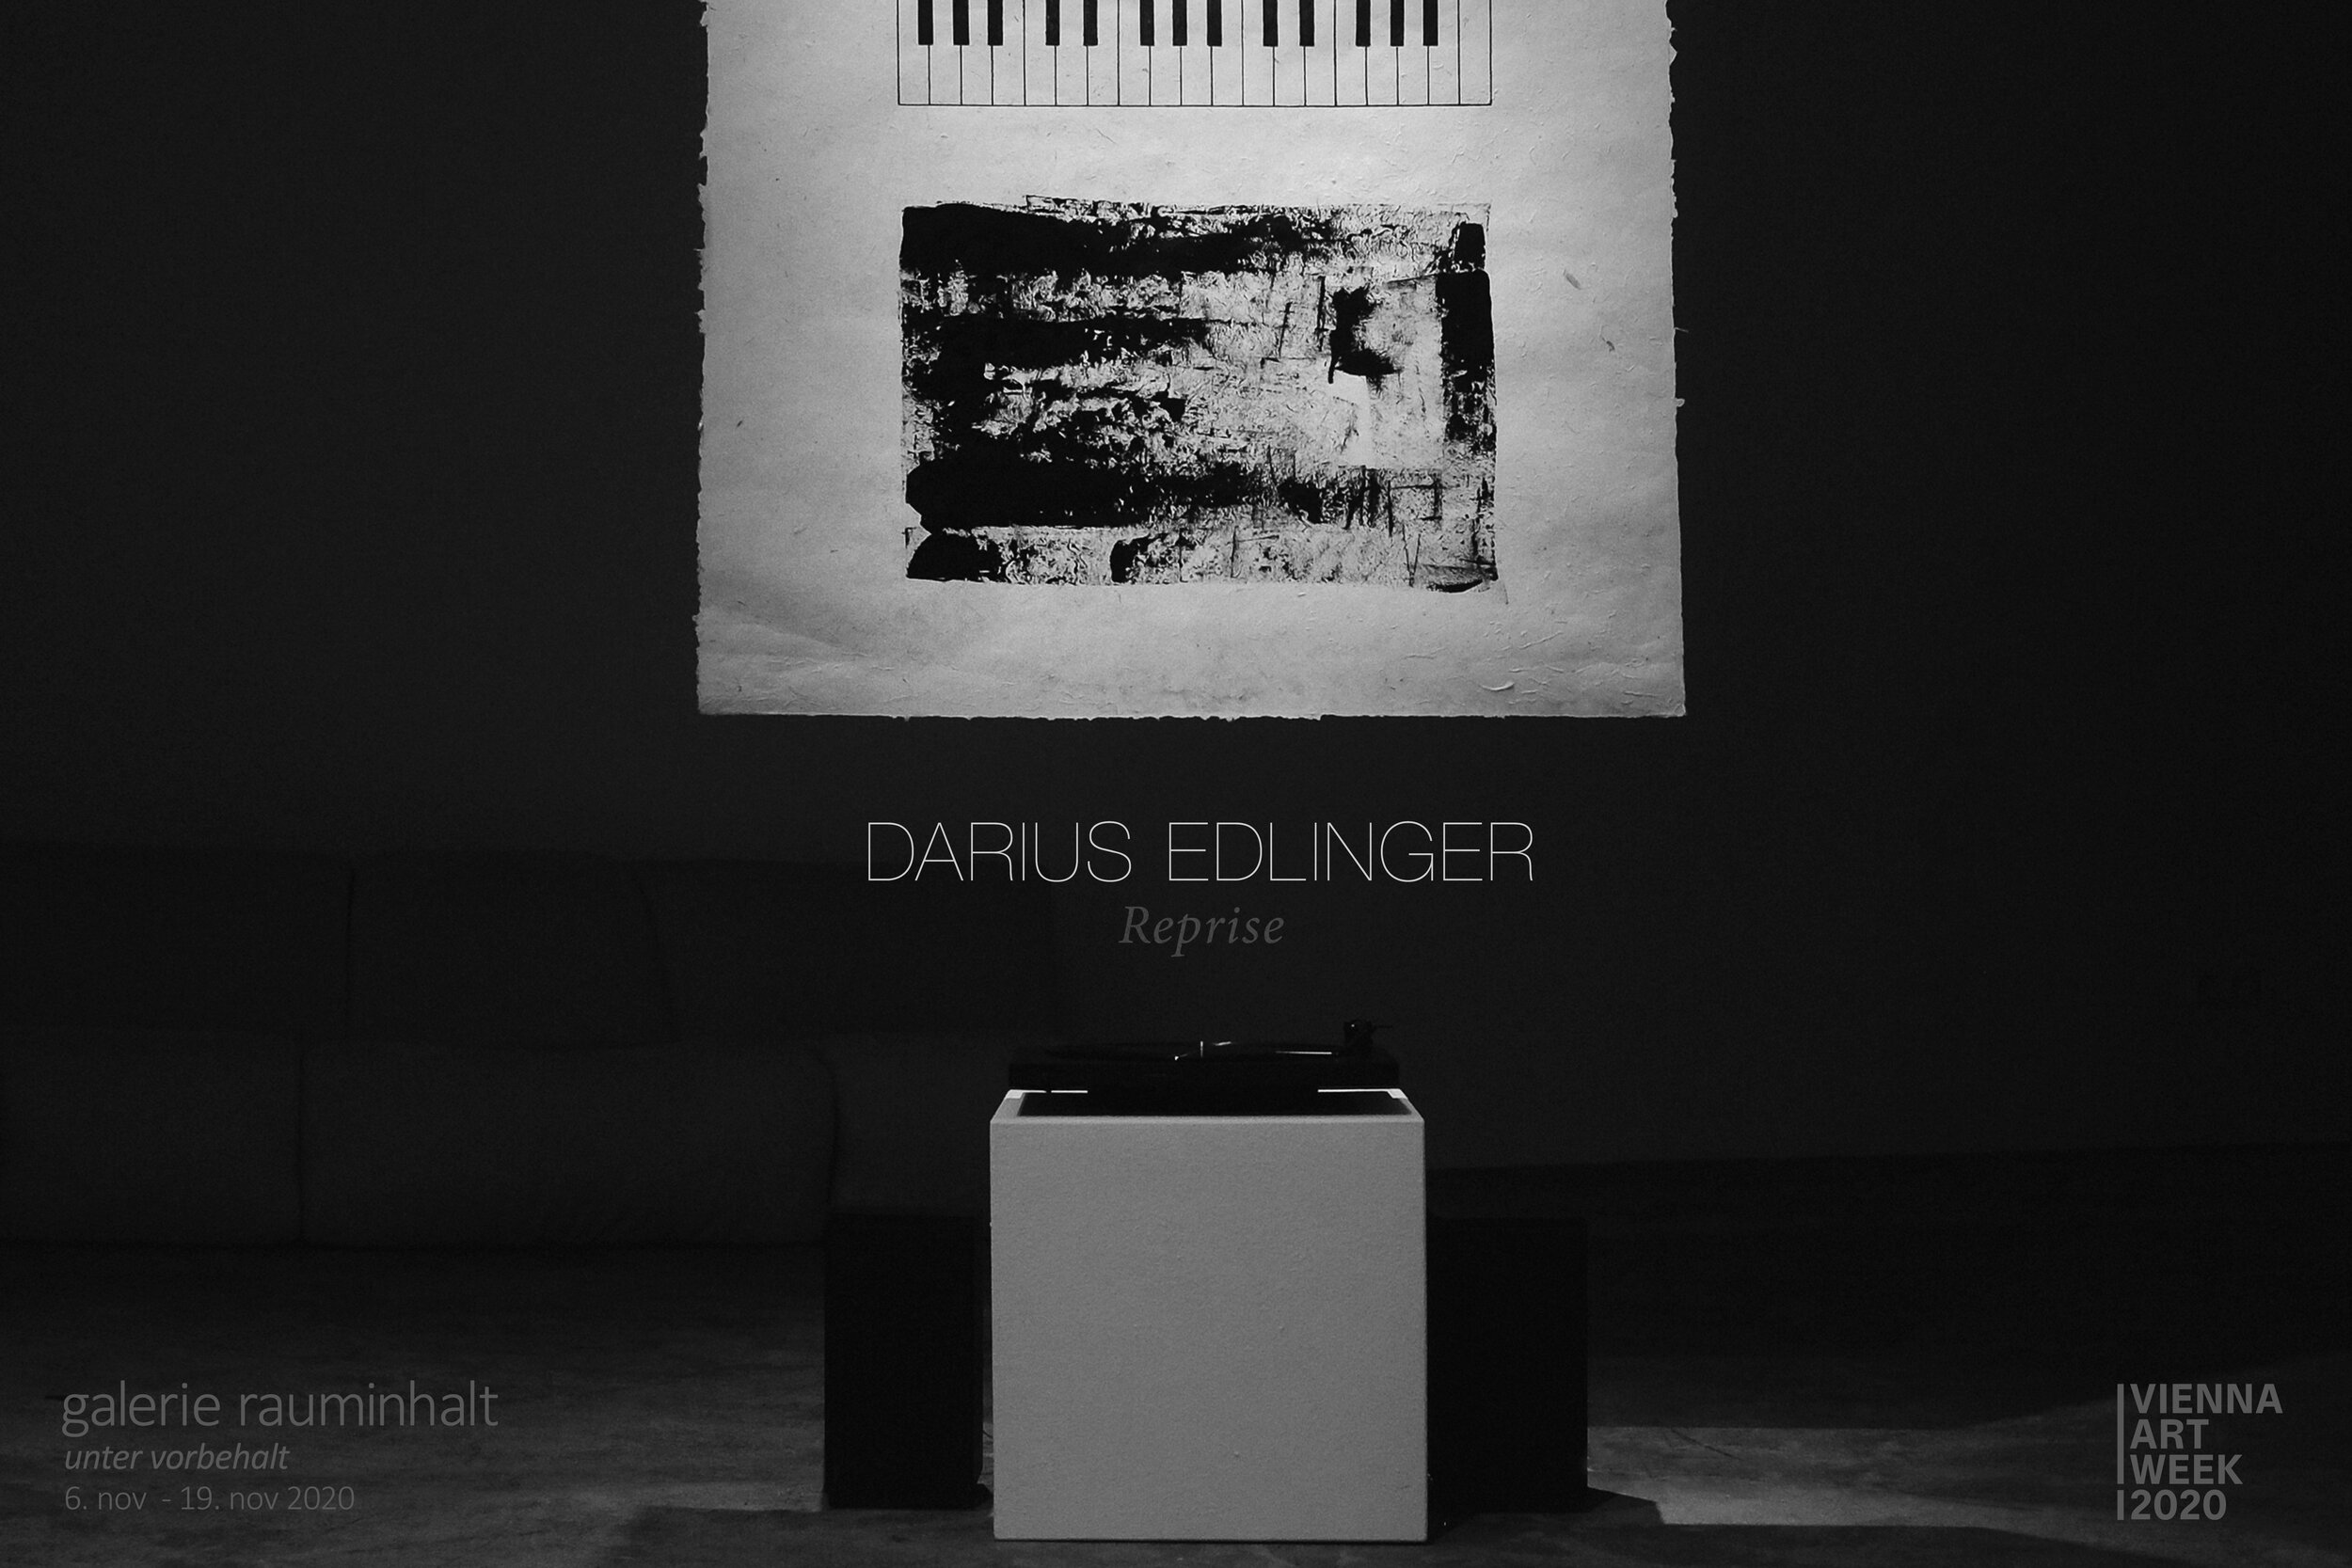 Darius Edlinger Reprise - Galerie Rauminhalt - Vienna Art Week 1